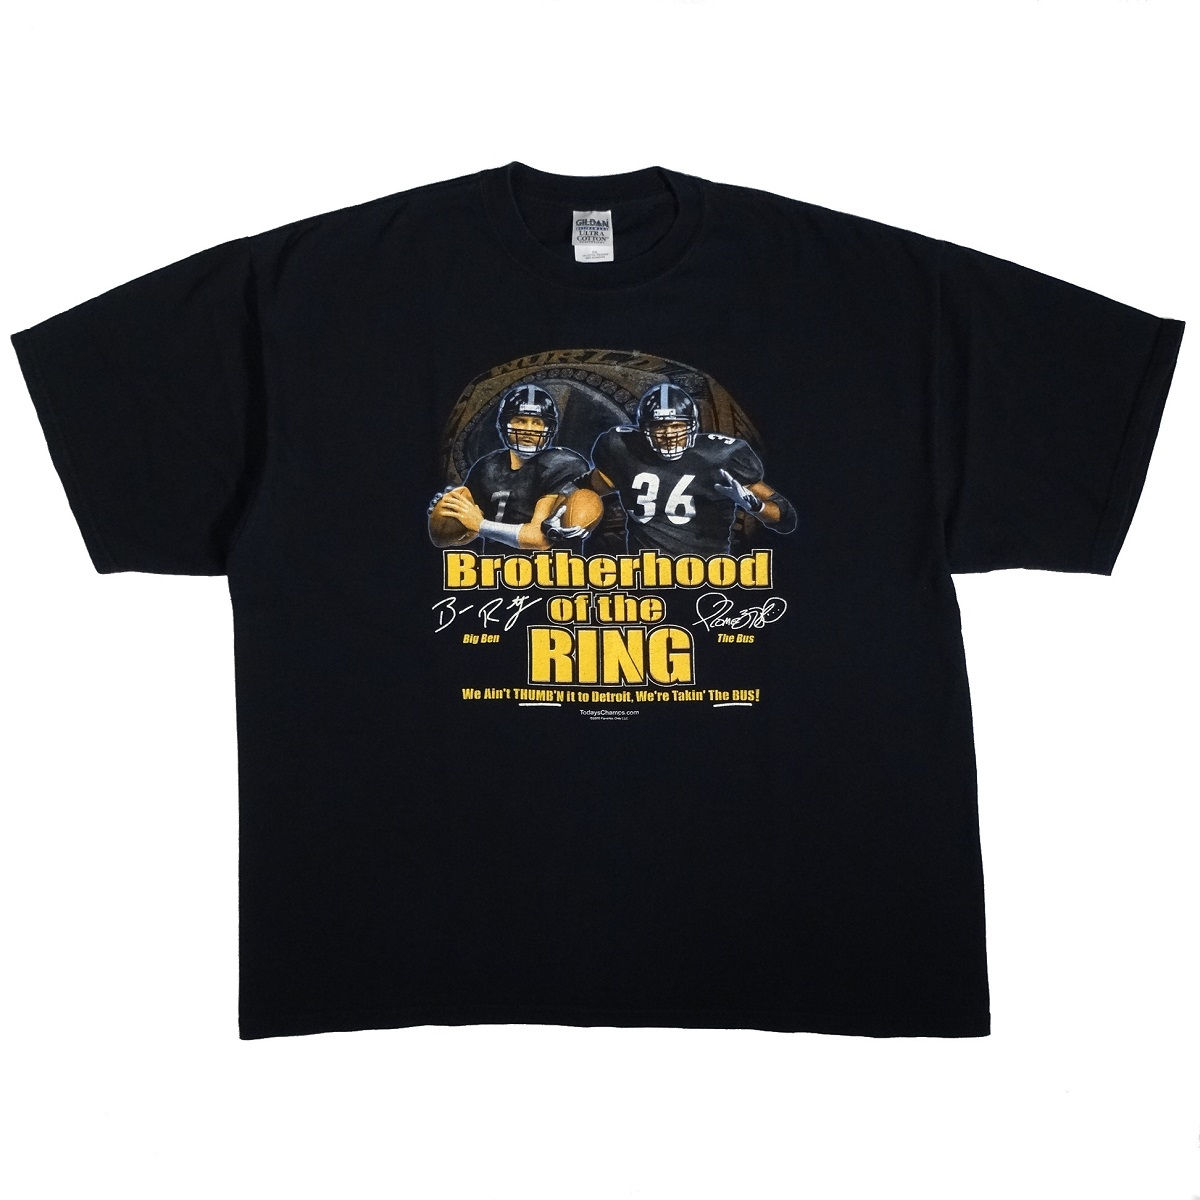 Pittsburgh Steelers Bettis Brotherhood Ring 2006 Shirt Front